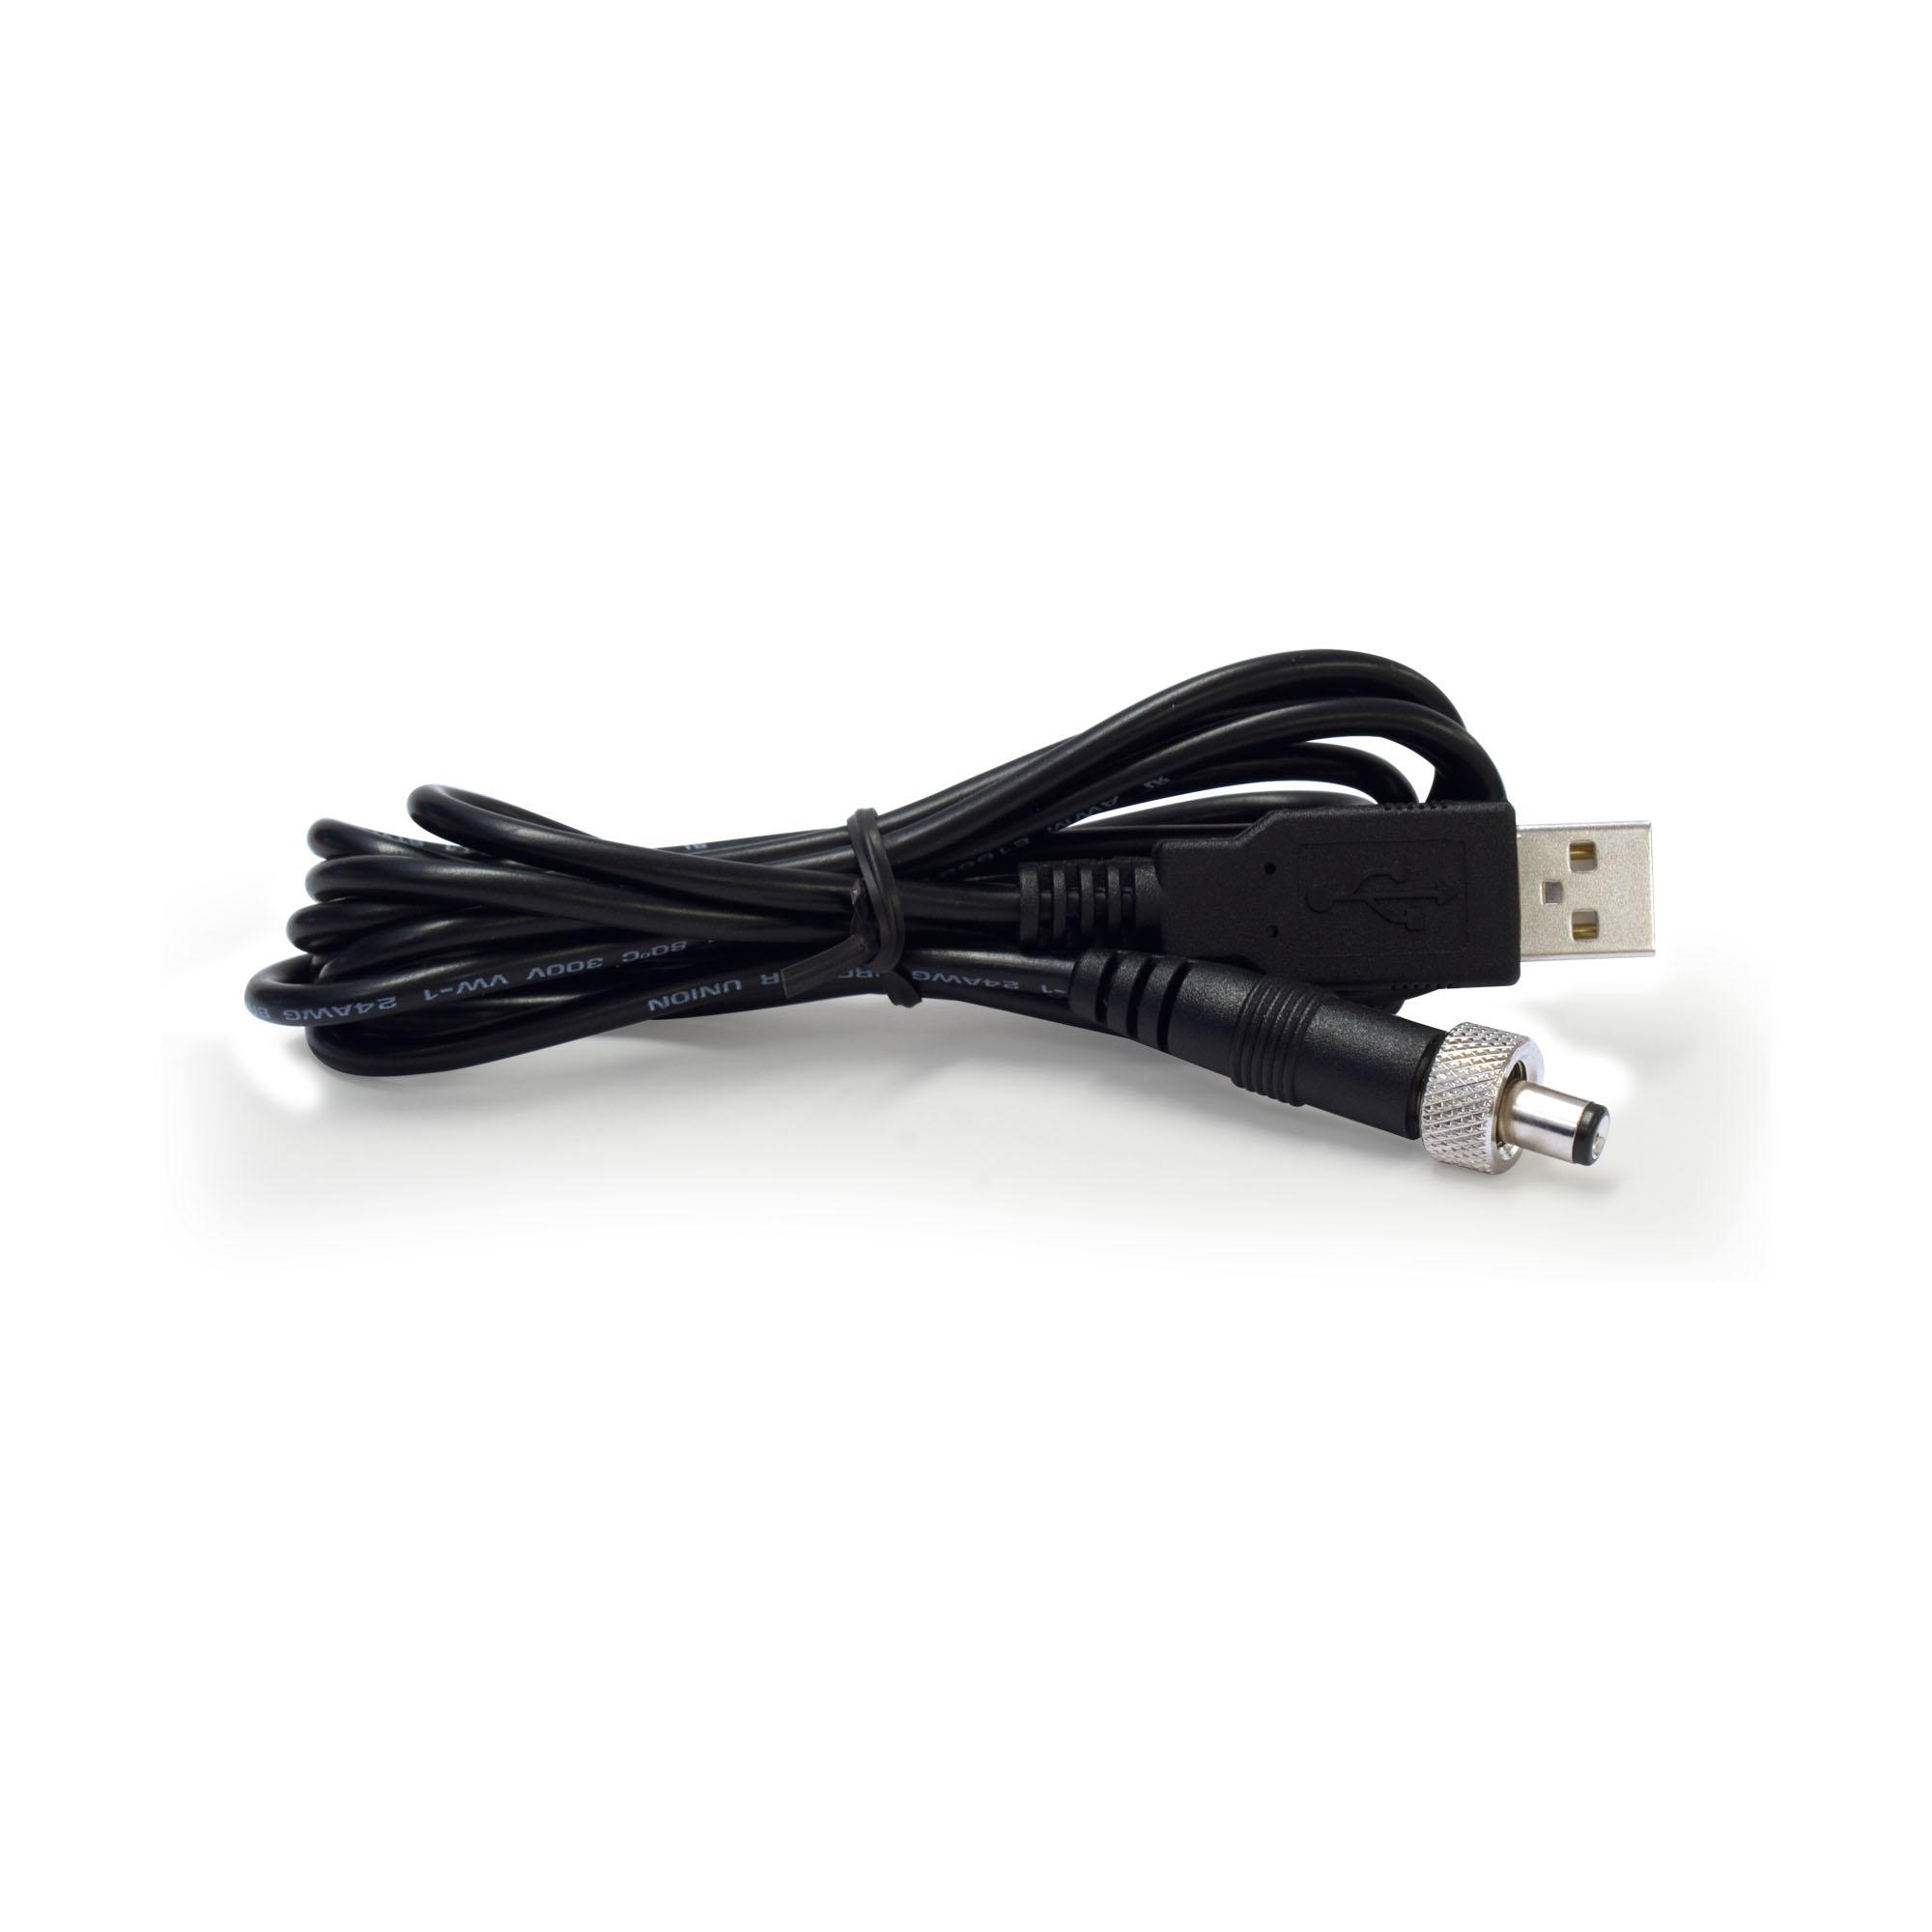 APC-USB USB Power Cord